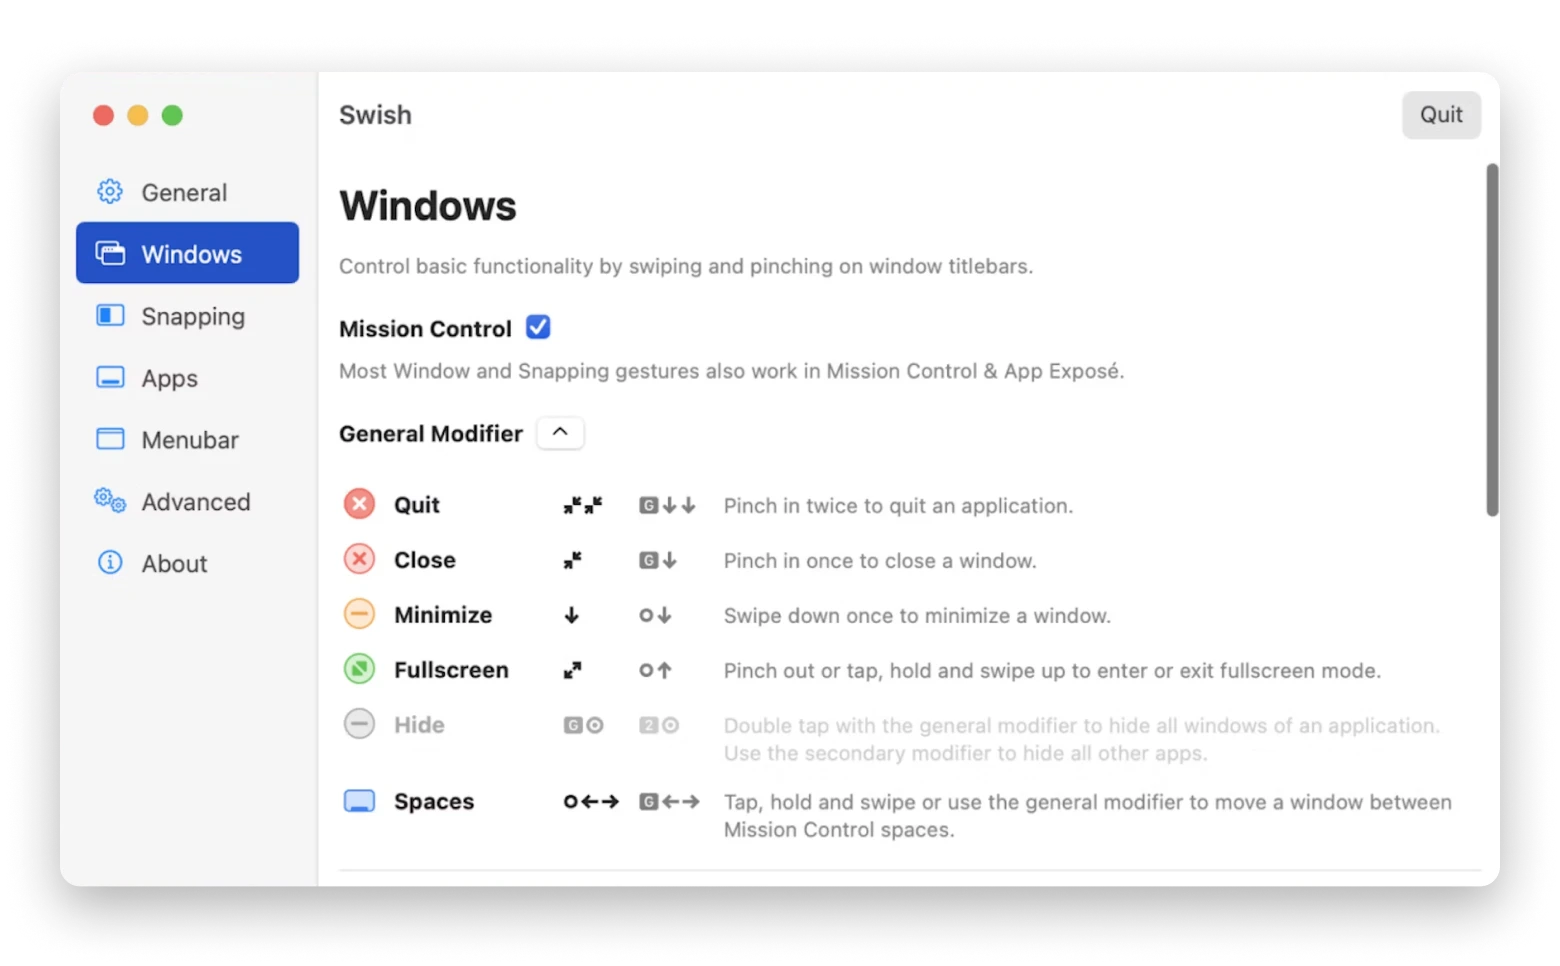 Control basic functionality by swiping and pinching on window titlebars